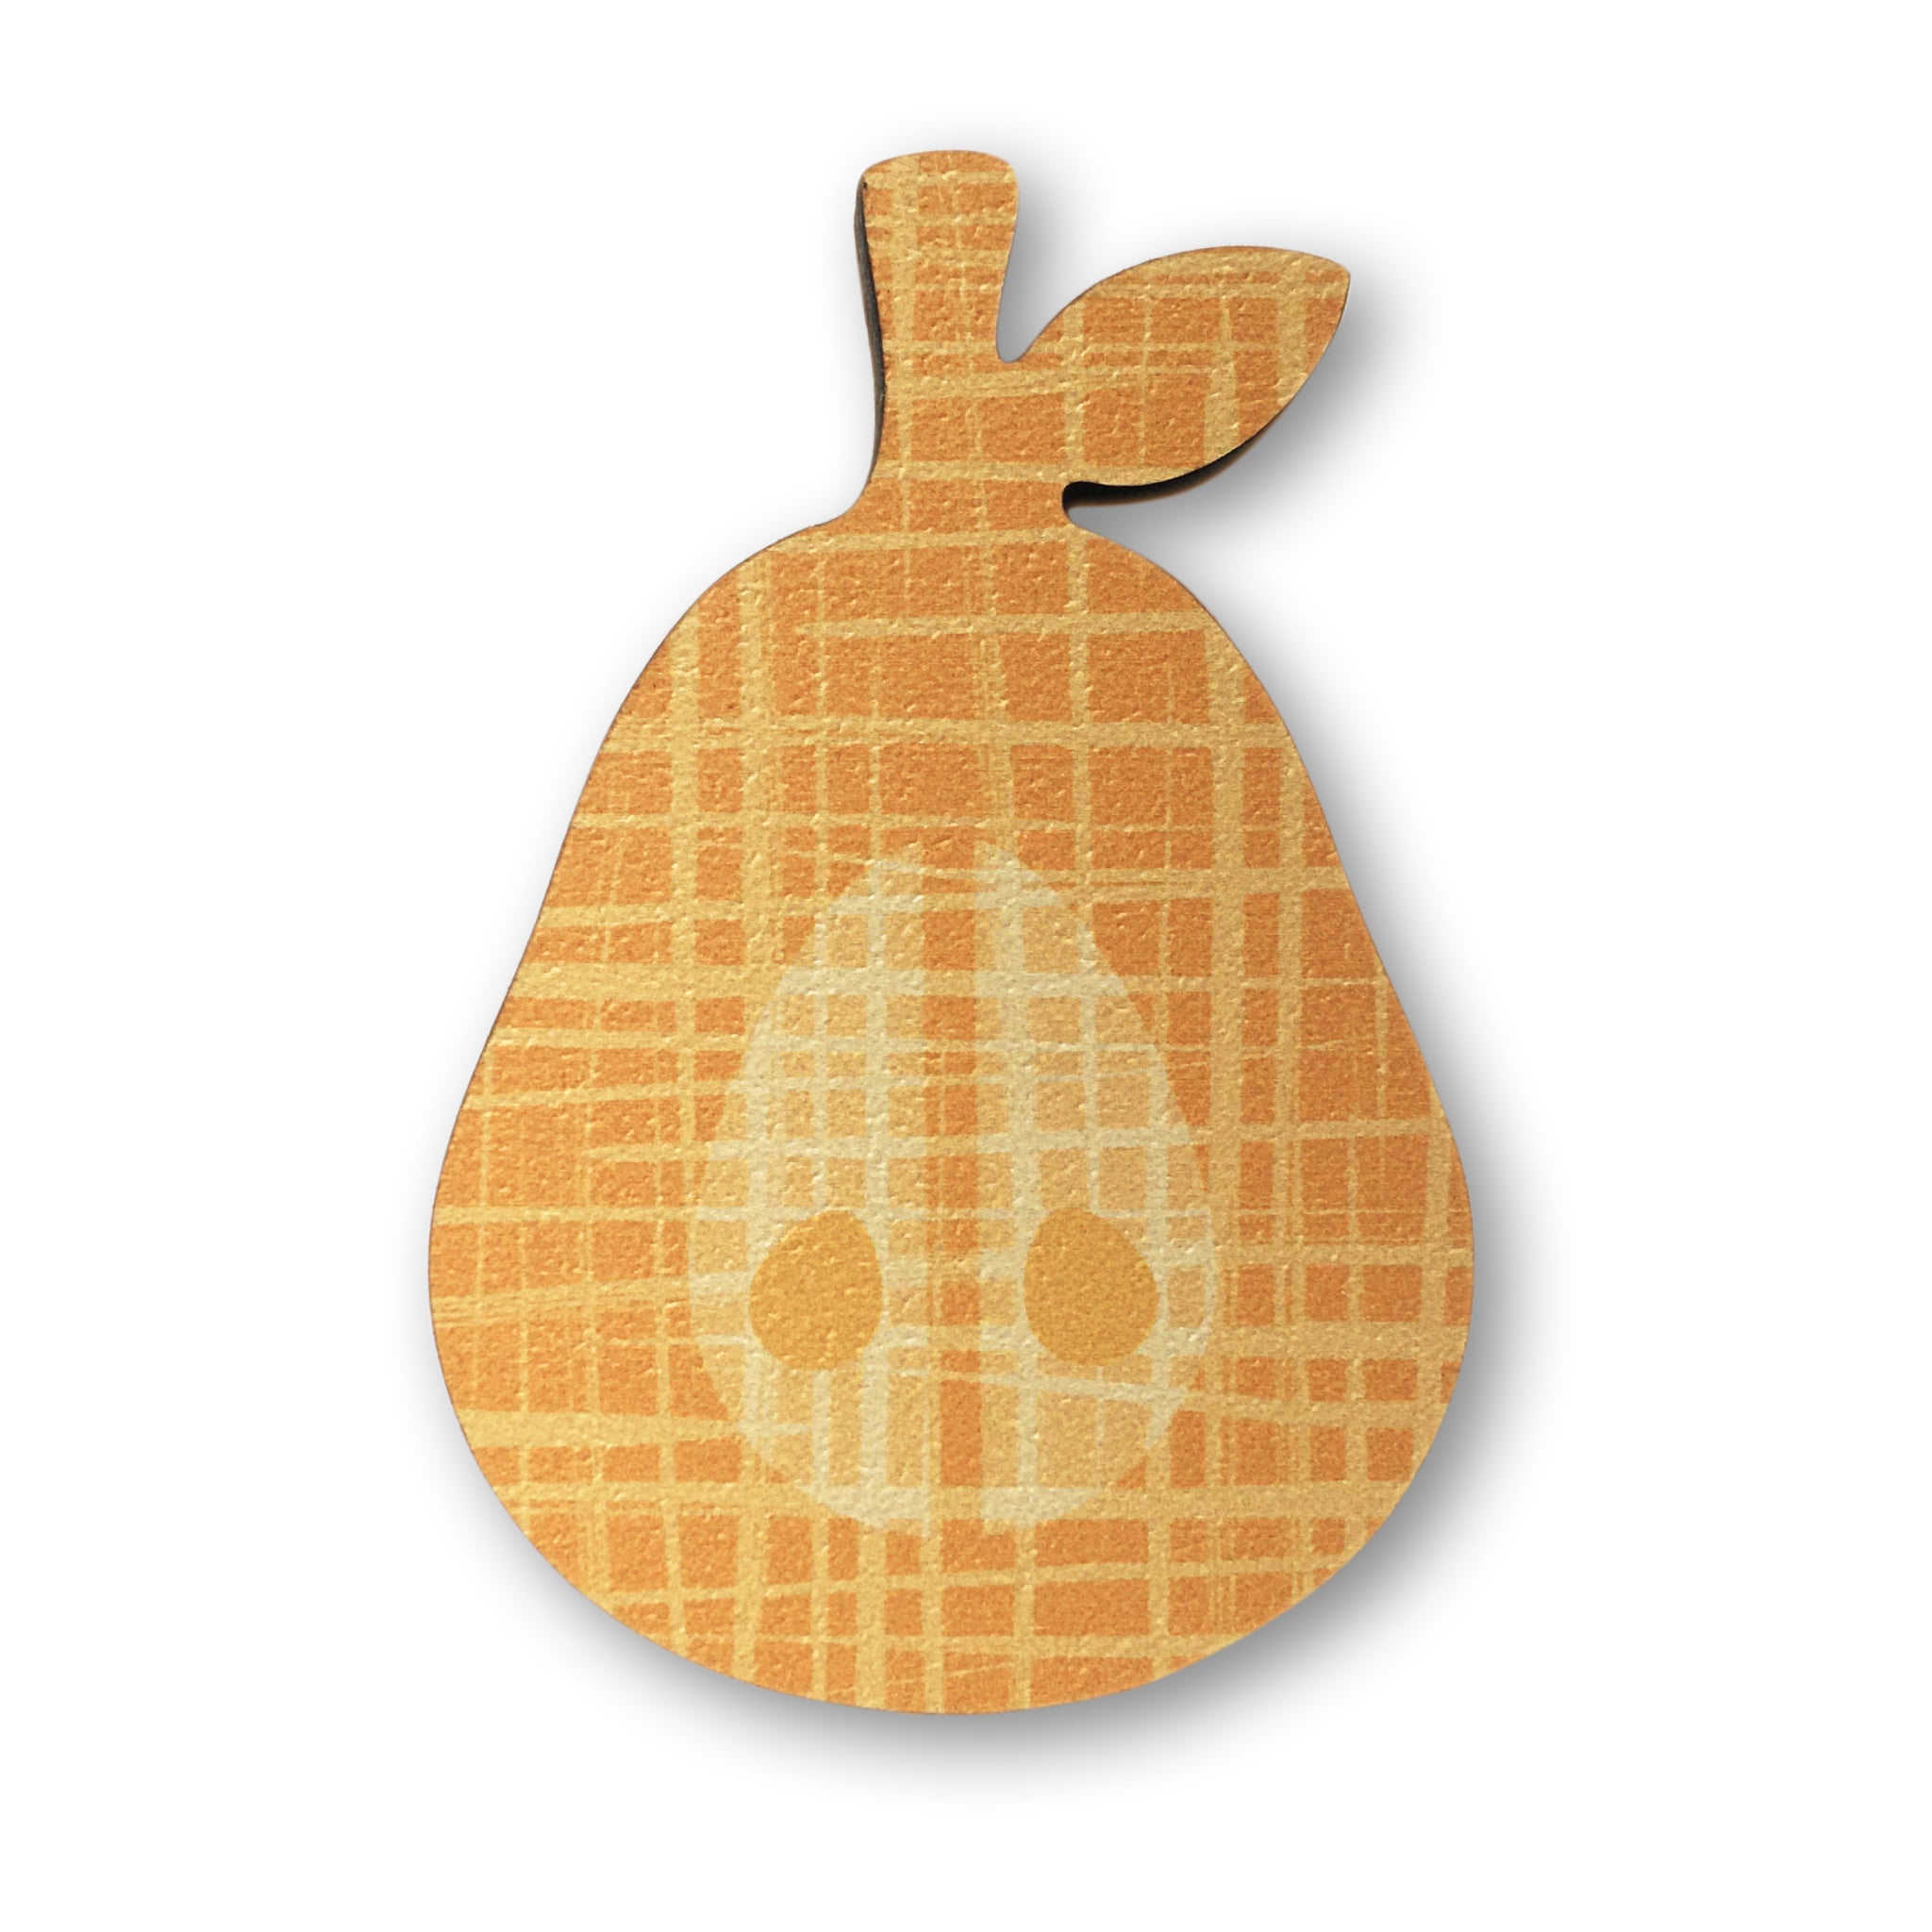 An orange pear design plywood fridge magnet by Beyond the Fridge